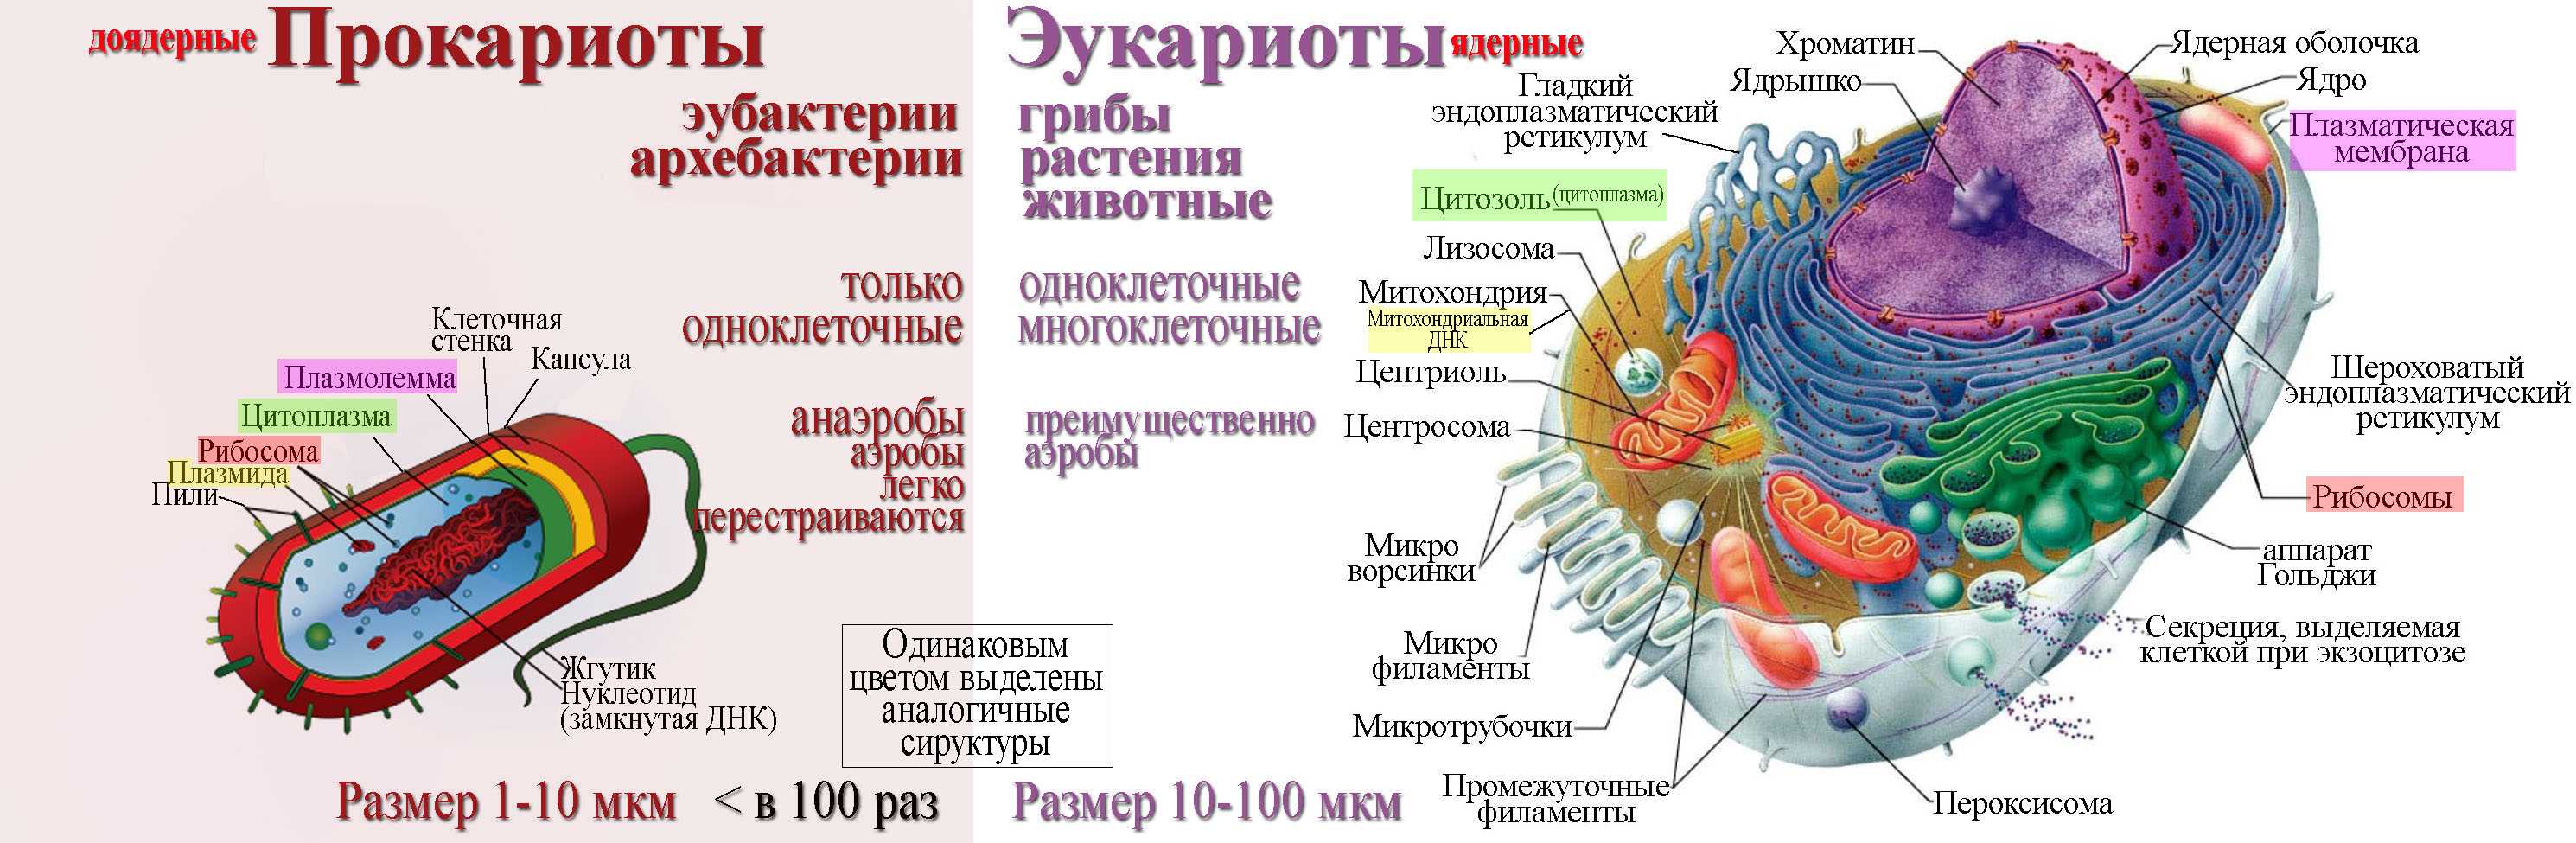 Руслан ершов: симбиогенез